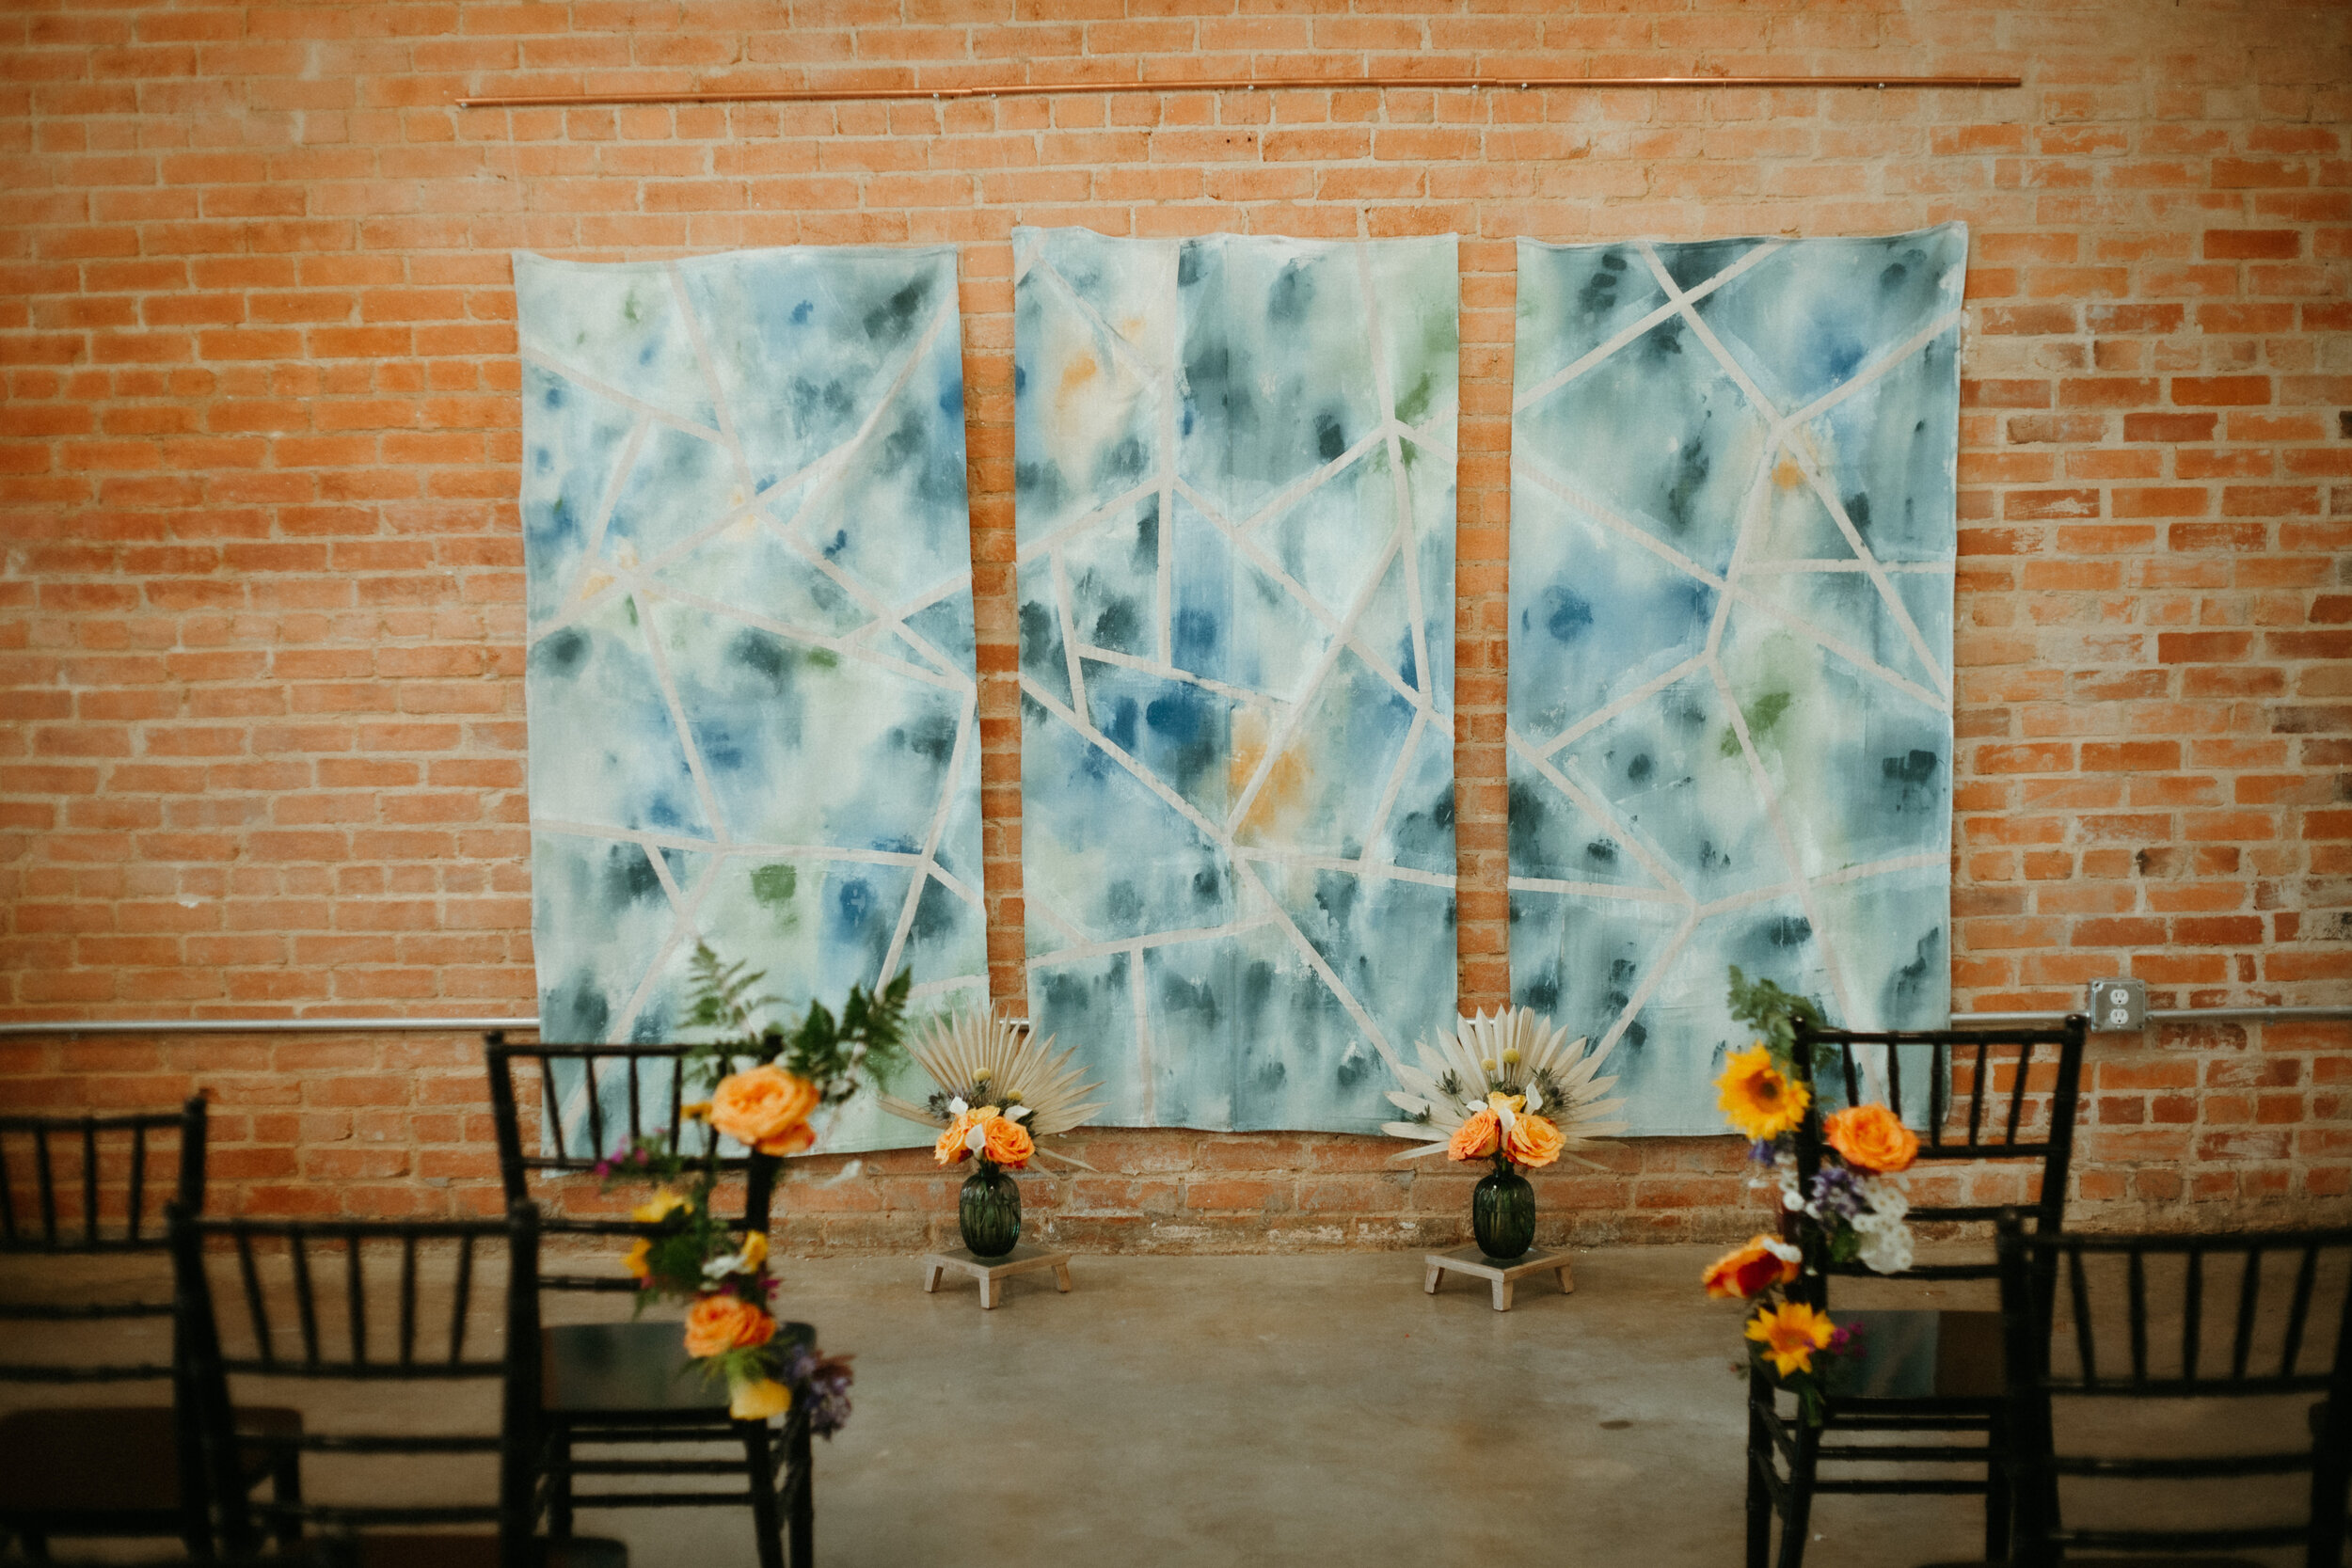  Artistic and colorful styled wedding shoot at Blanc Denver in Katherine Tash Ilaria wedding dress 